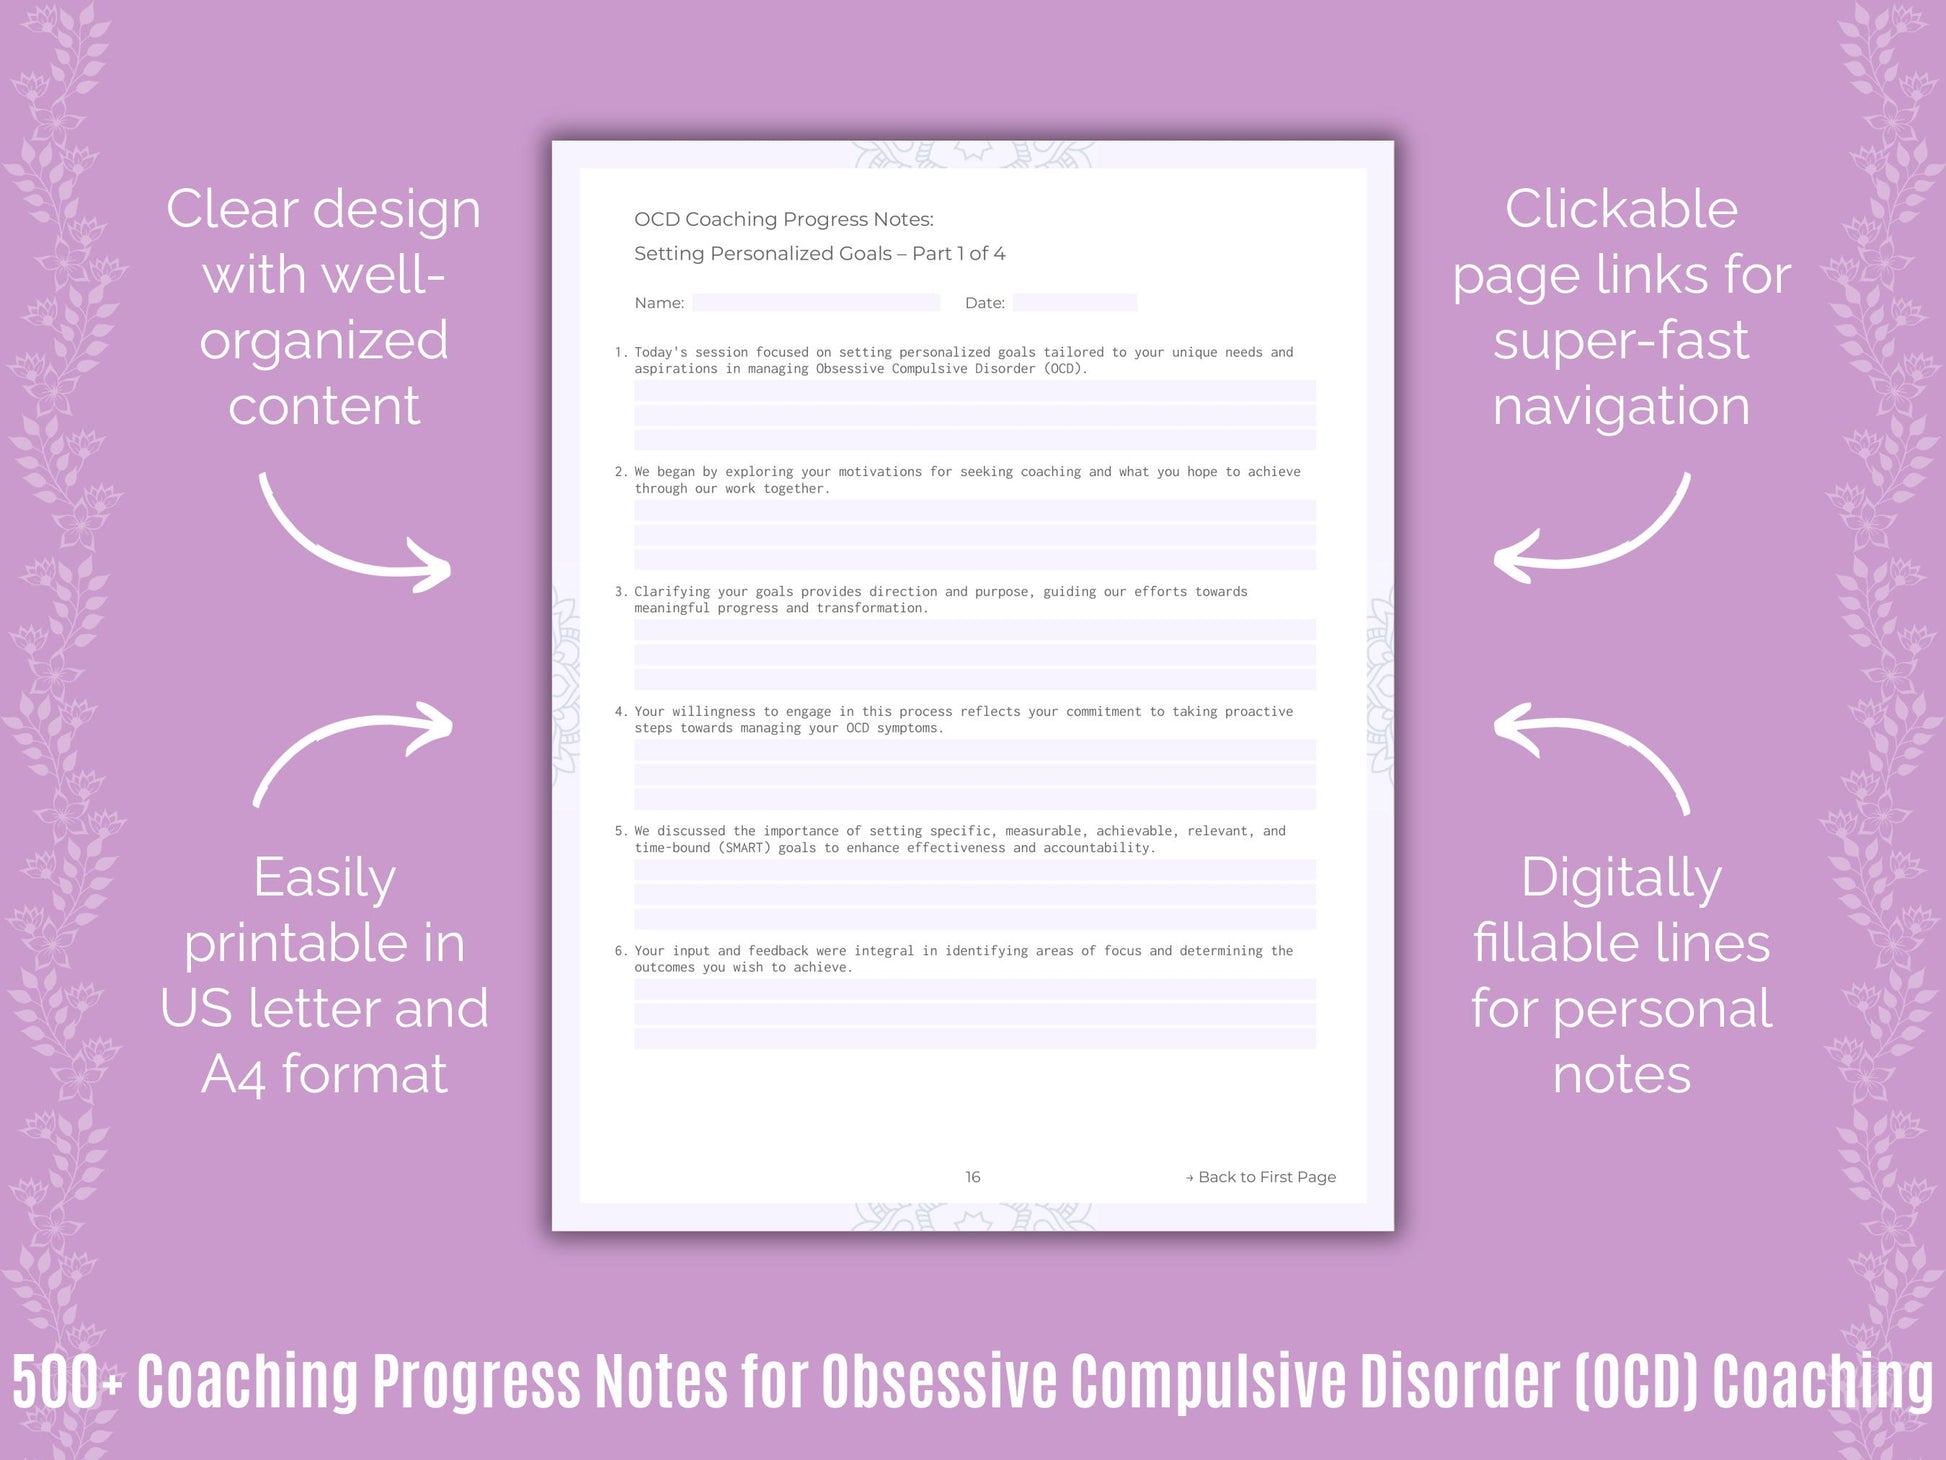 Obsessive Compulsive Disorder (OCD) Coaching